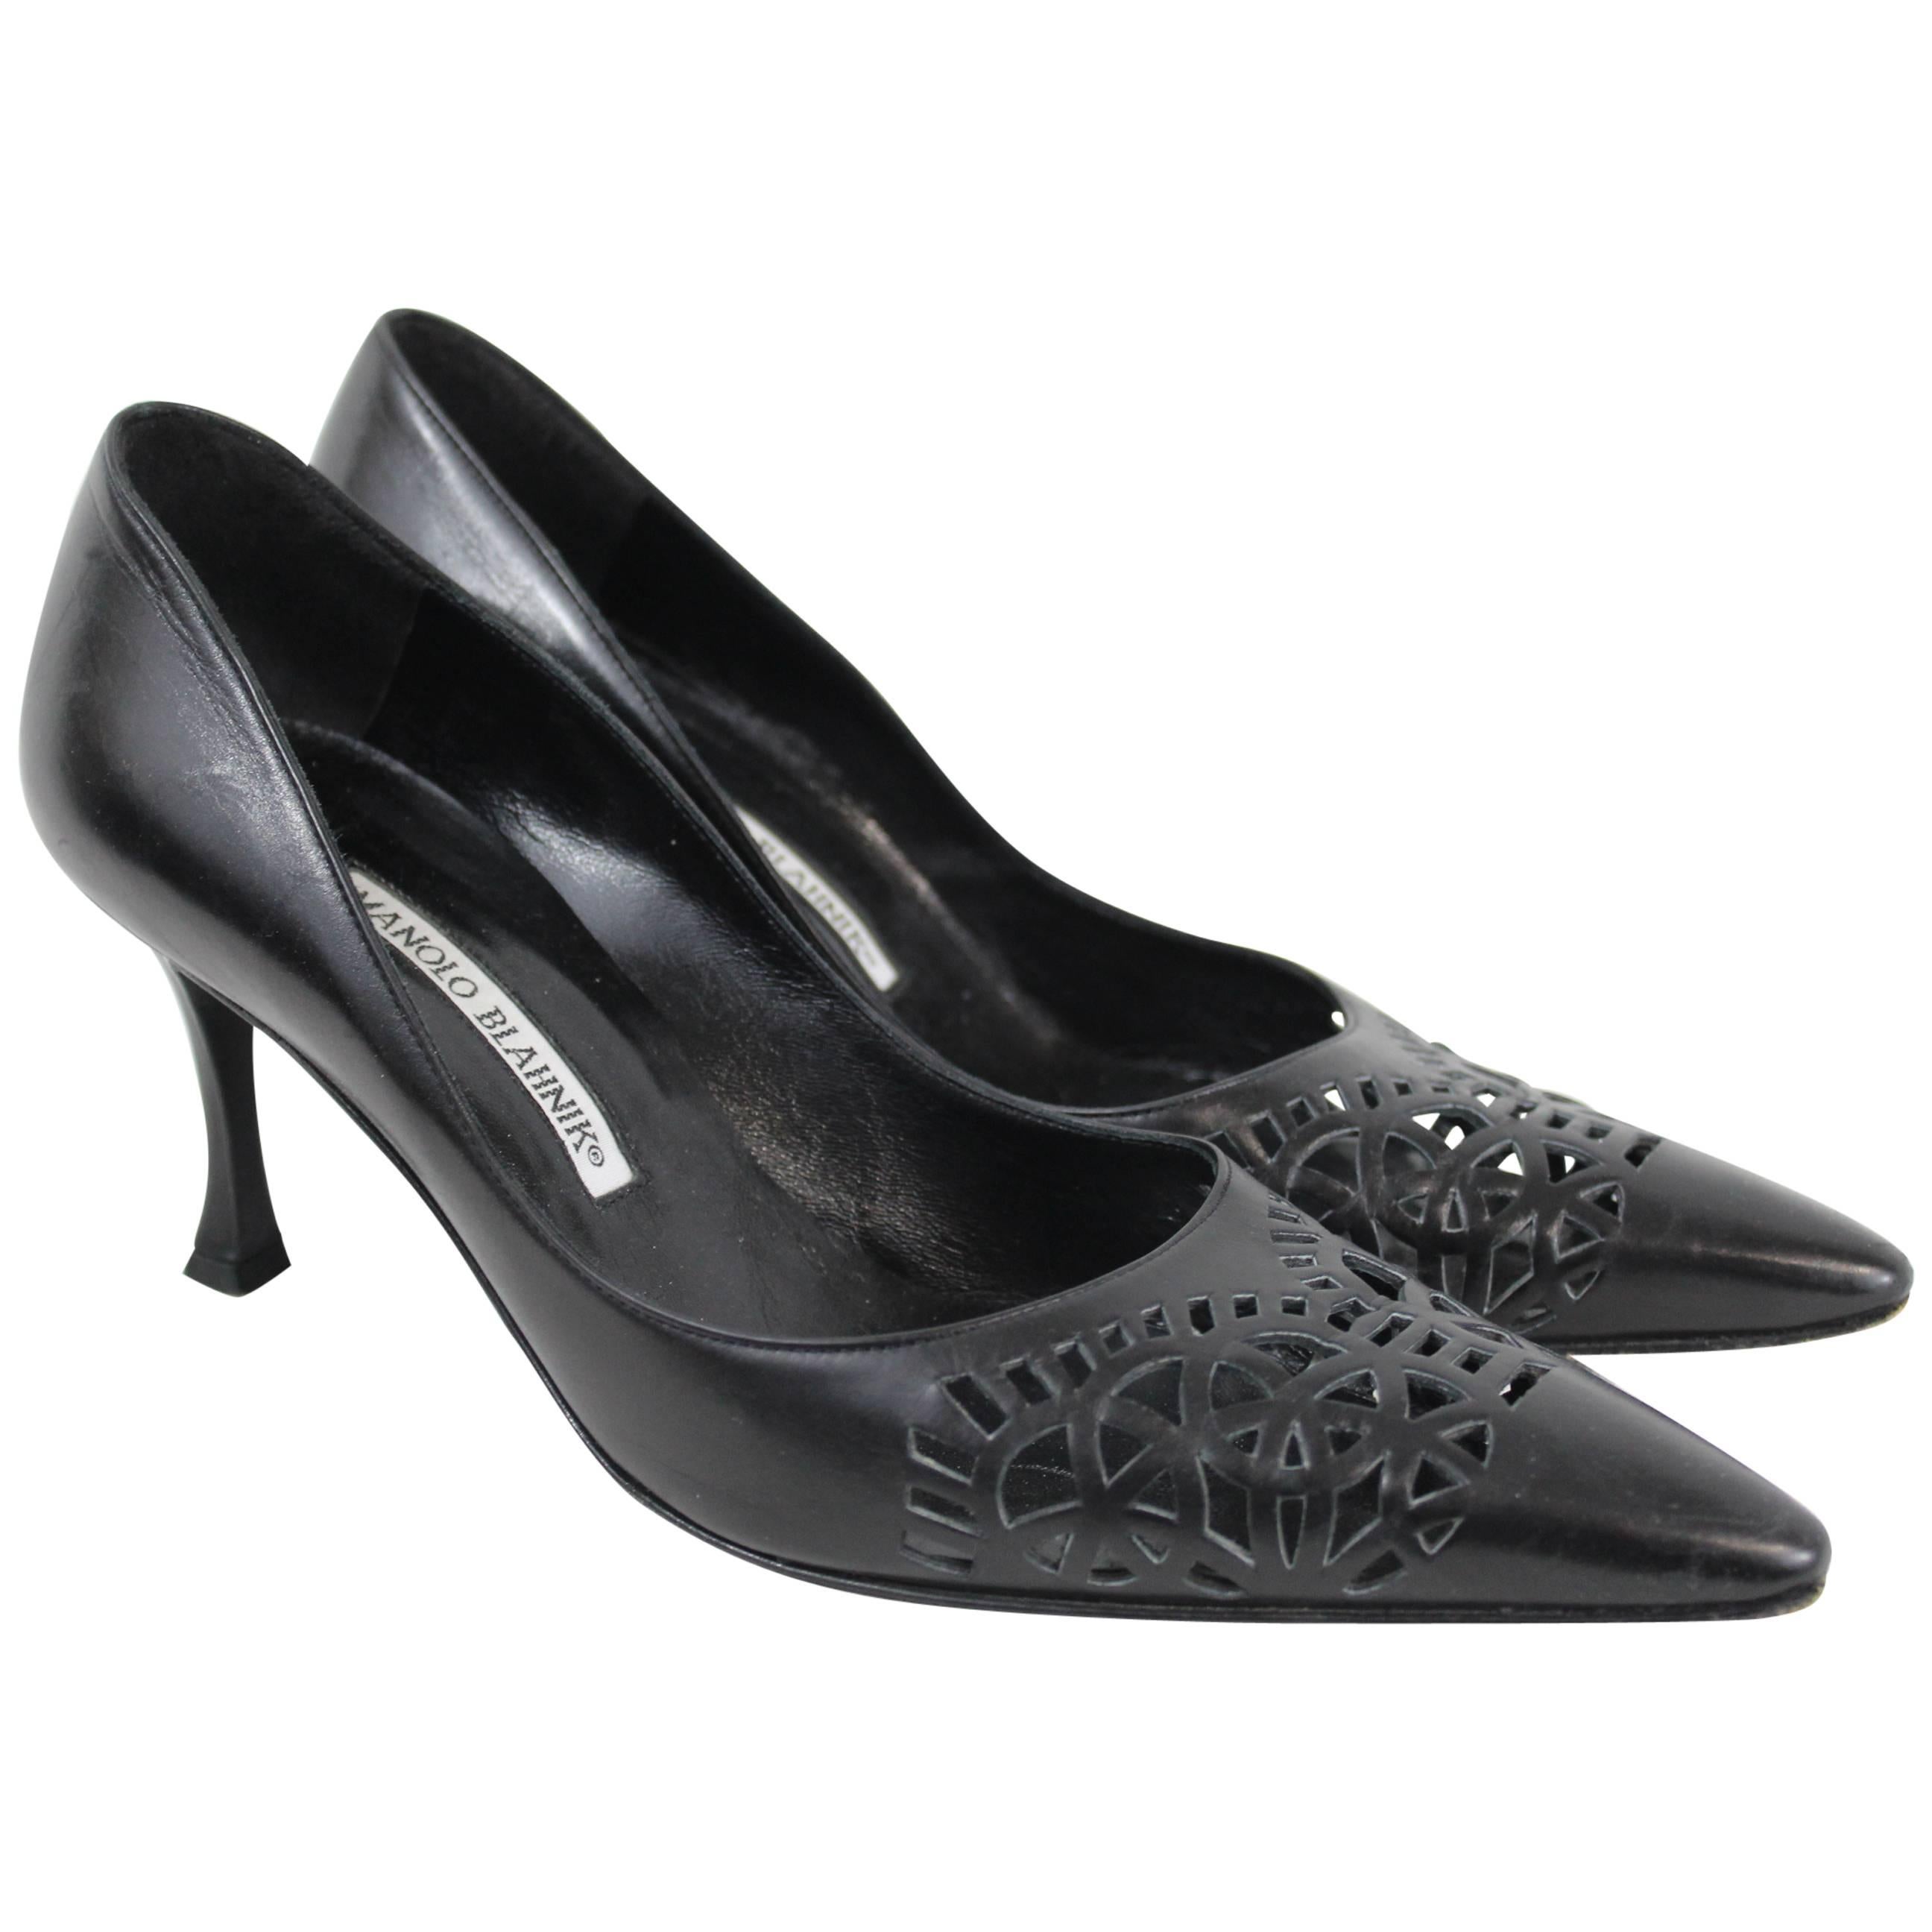 Manolo Blahnik Black Leather Shoes. Size 7 (38, 5)